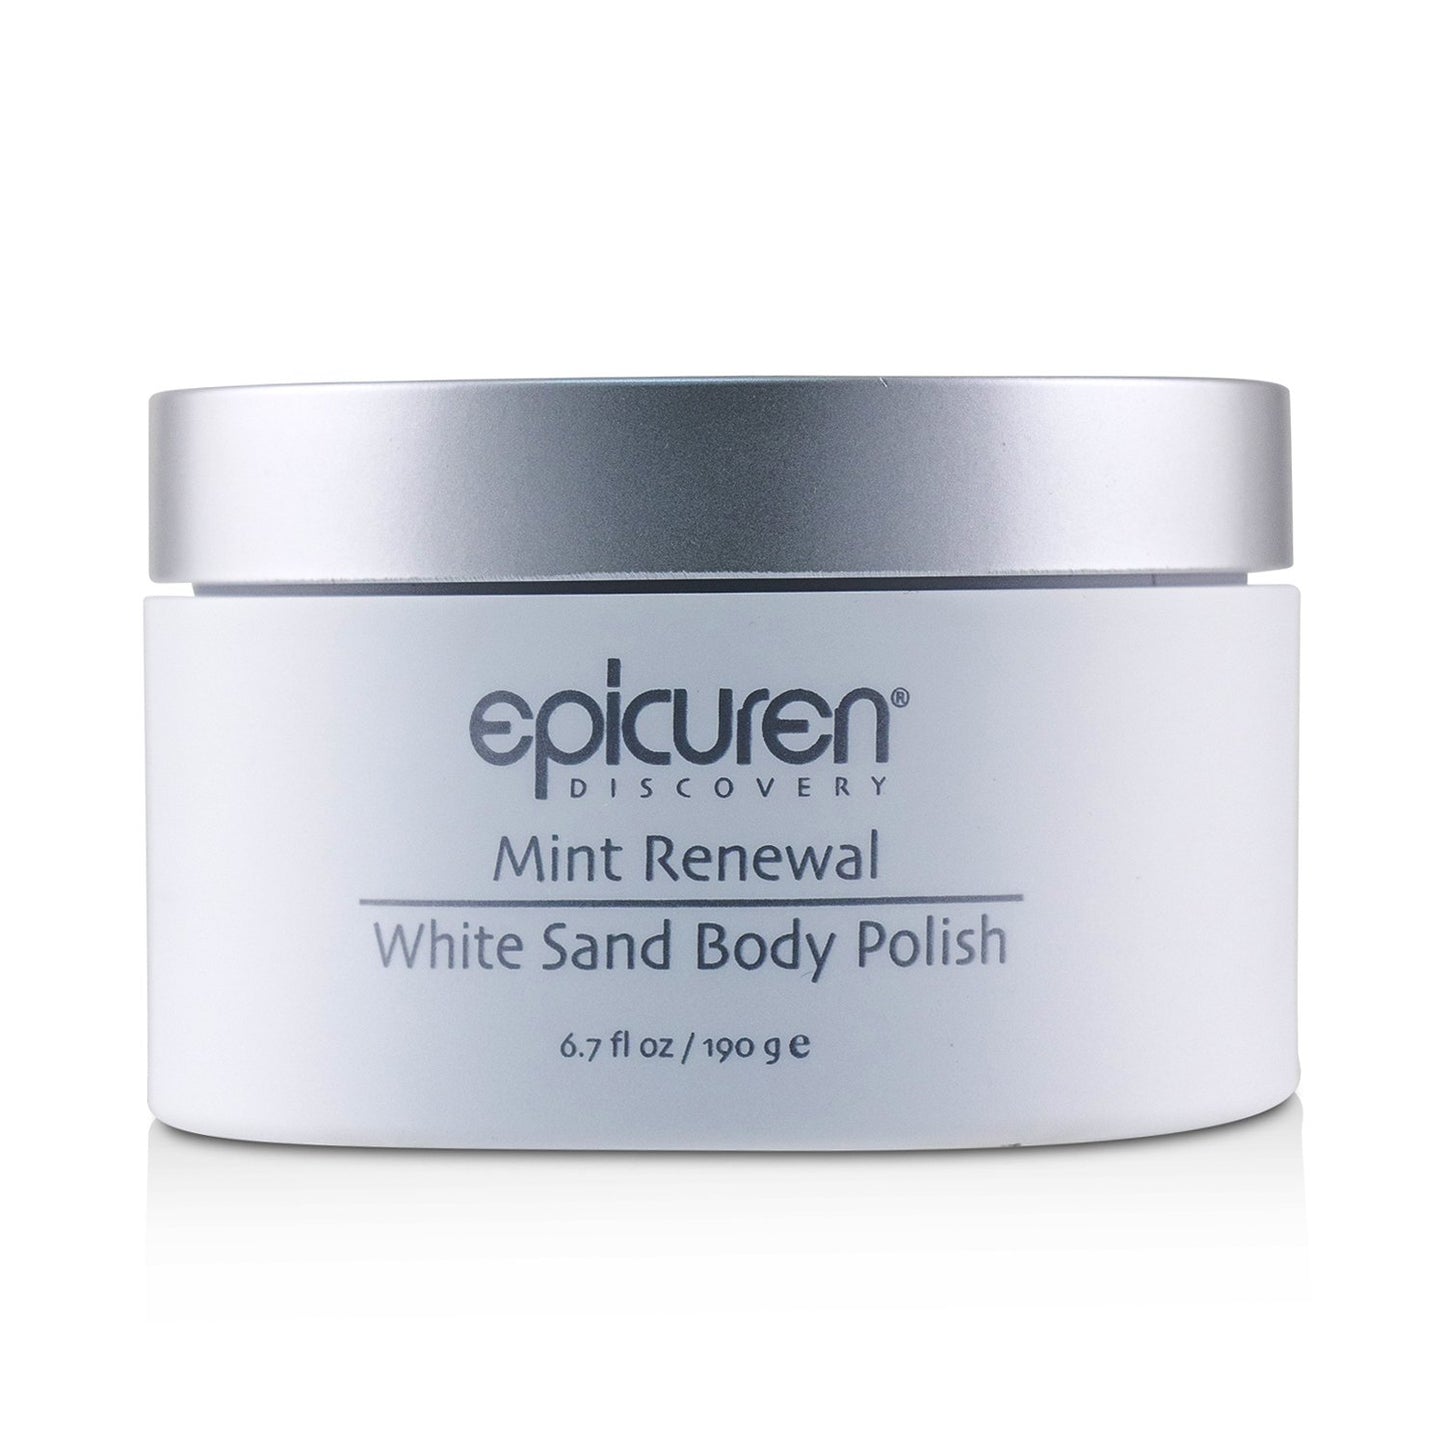 Epicuren Mint Renewal White Sand Body Polish and Scrub, 6.7 oz